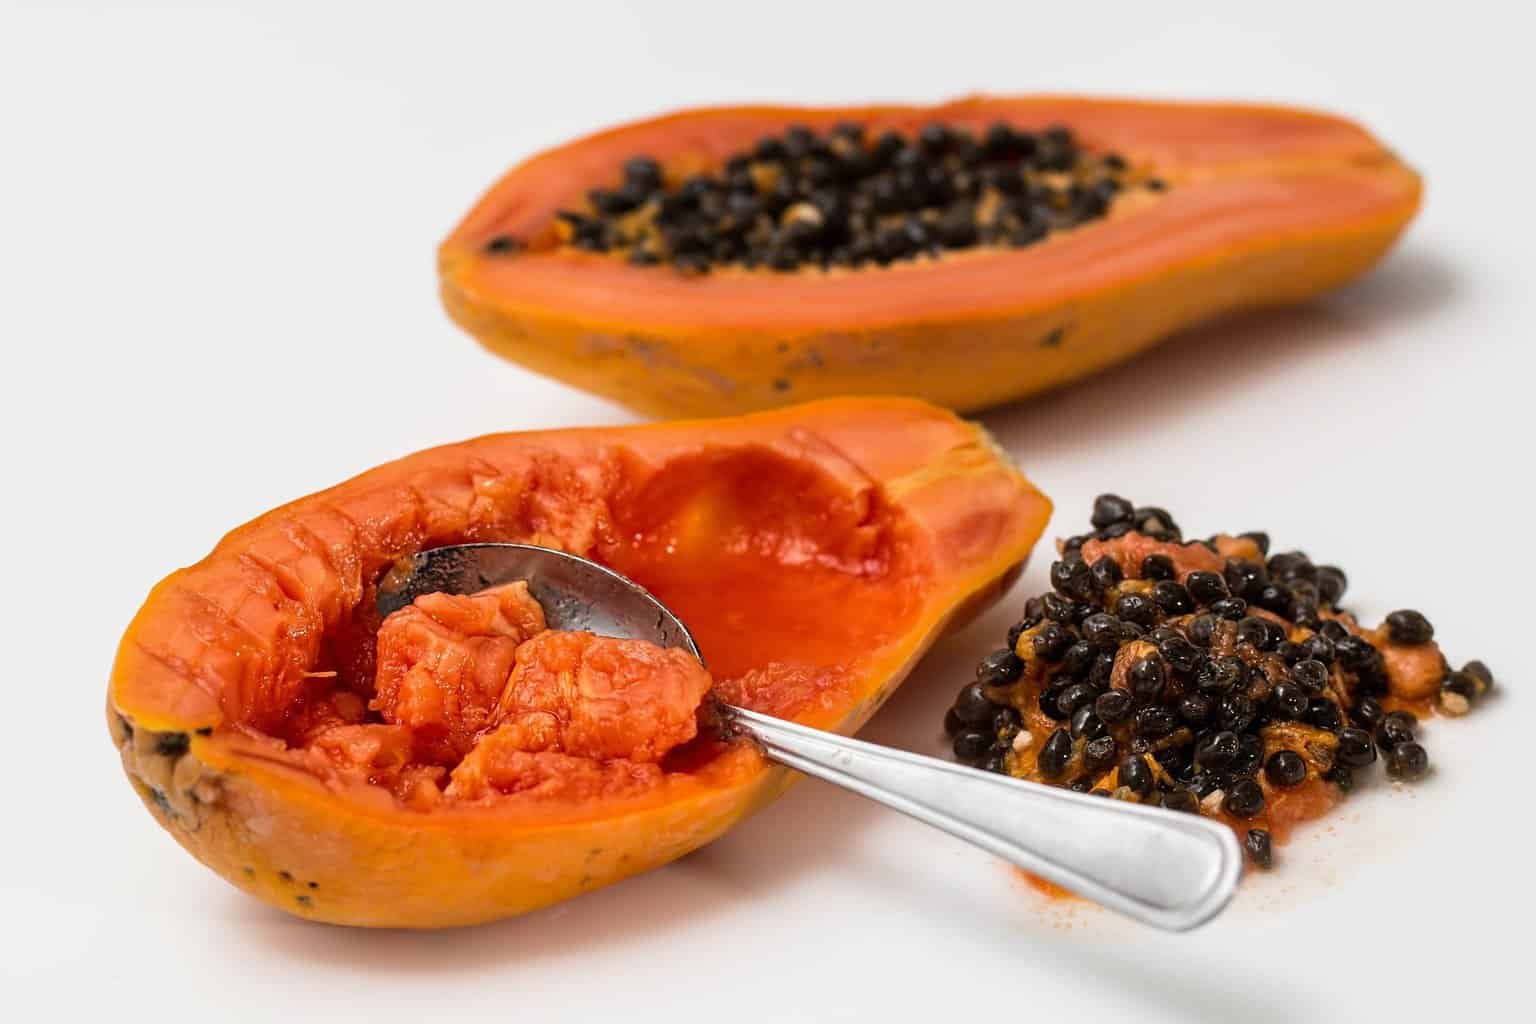 Carica papaya Nutrition, Health Benefits, Recipes, and More